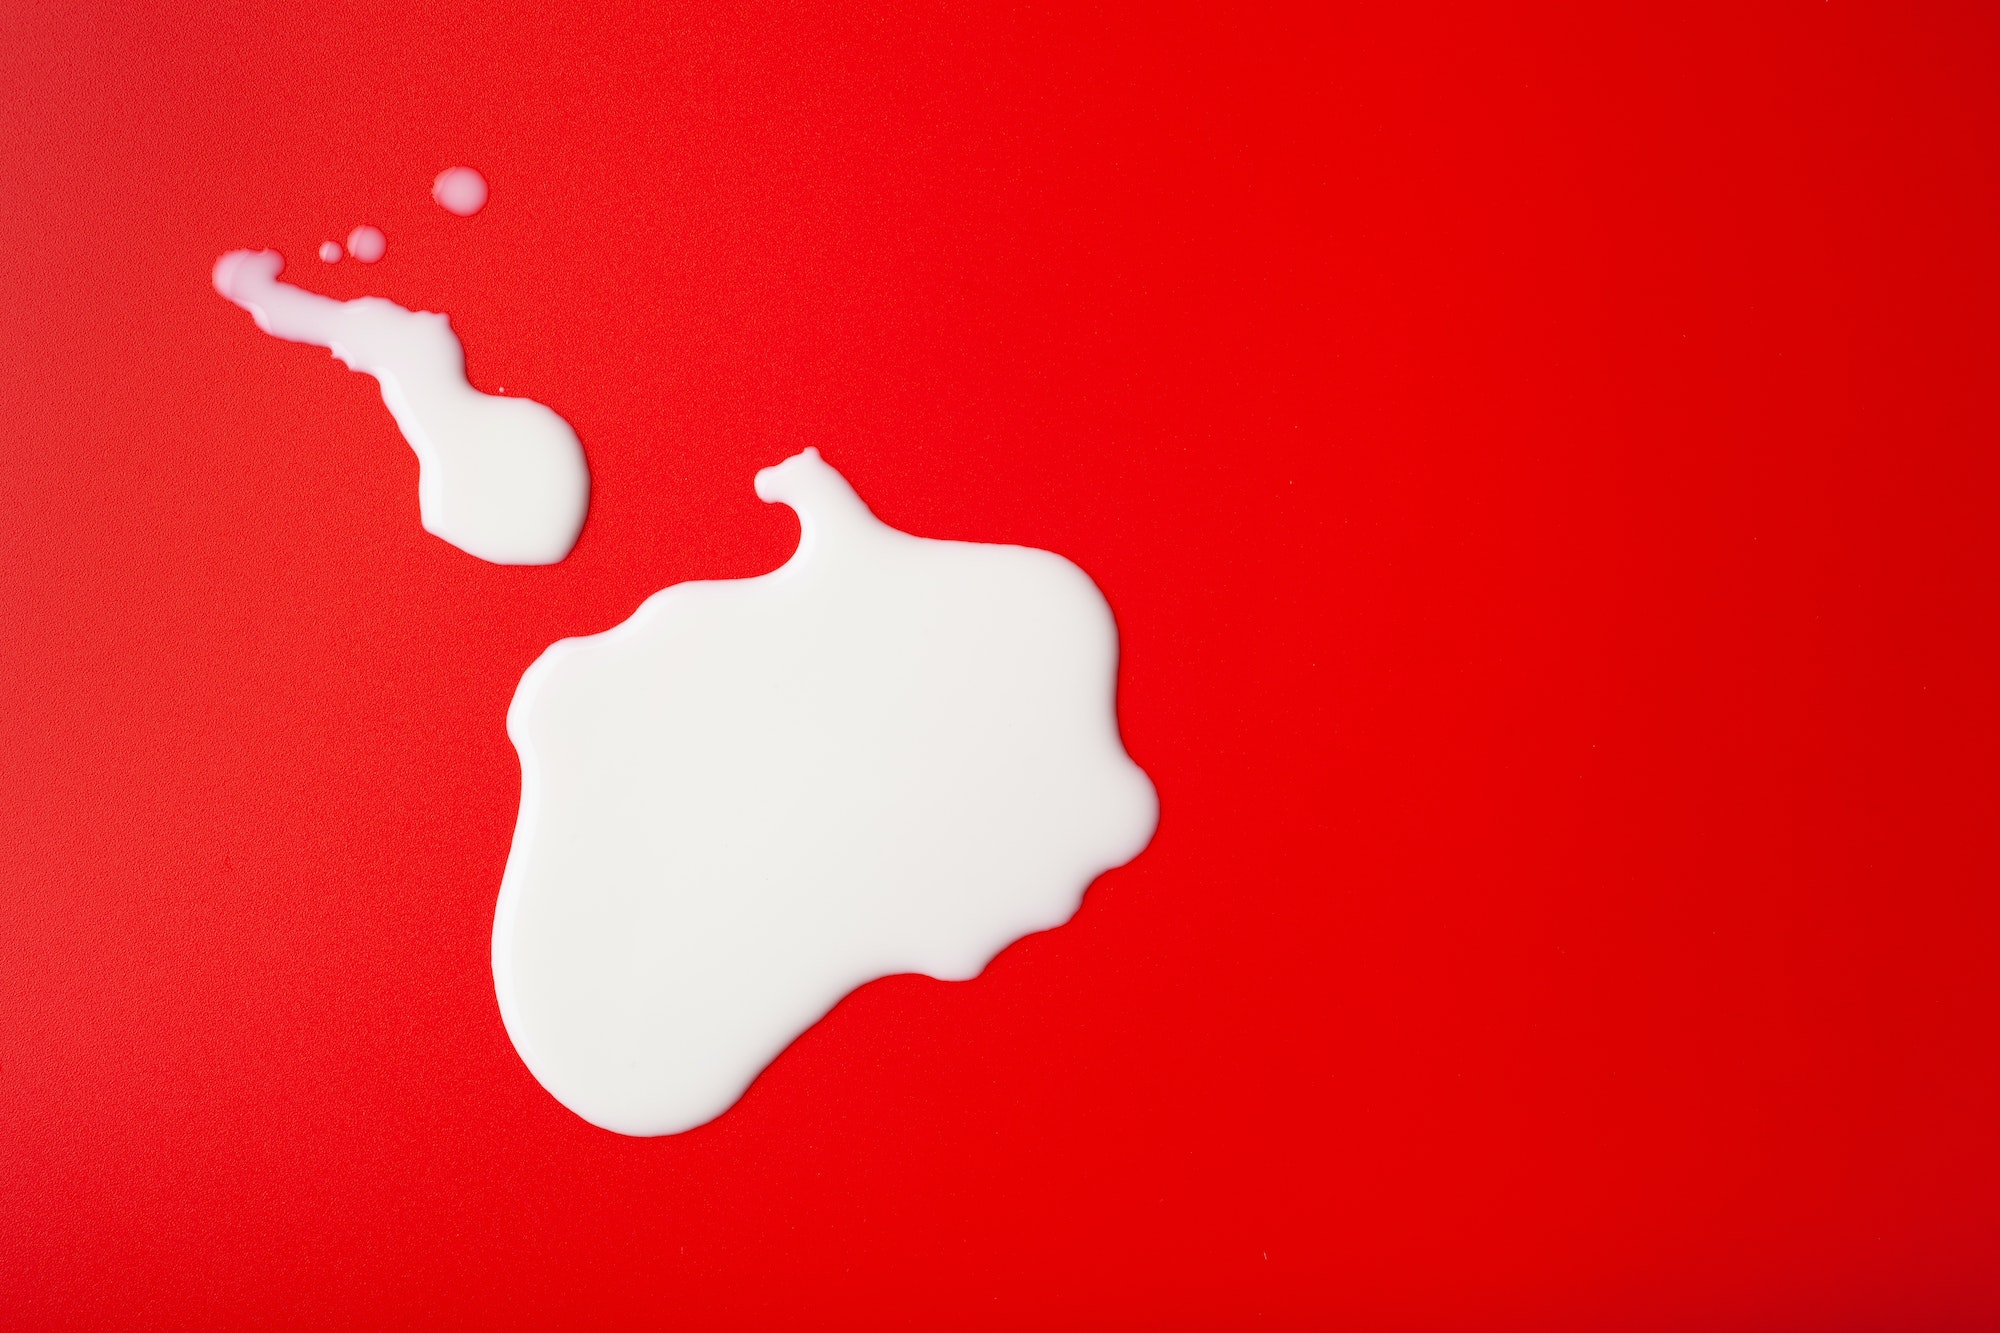 bad milk lactose intolerance allergy. milk splatter. avoid dangerous dairy